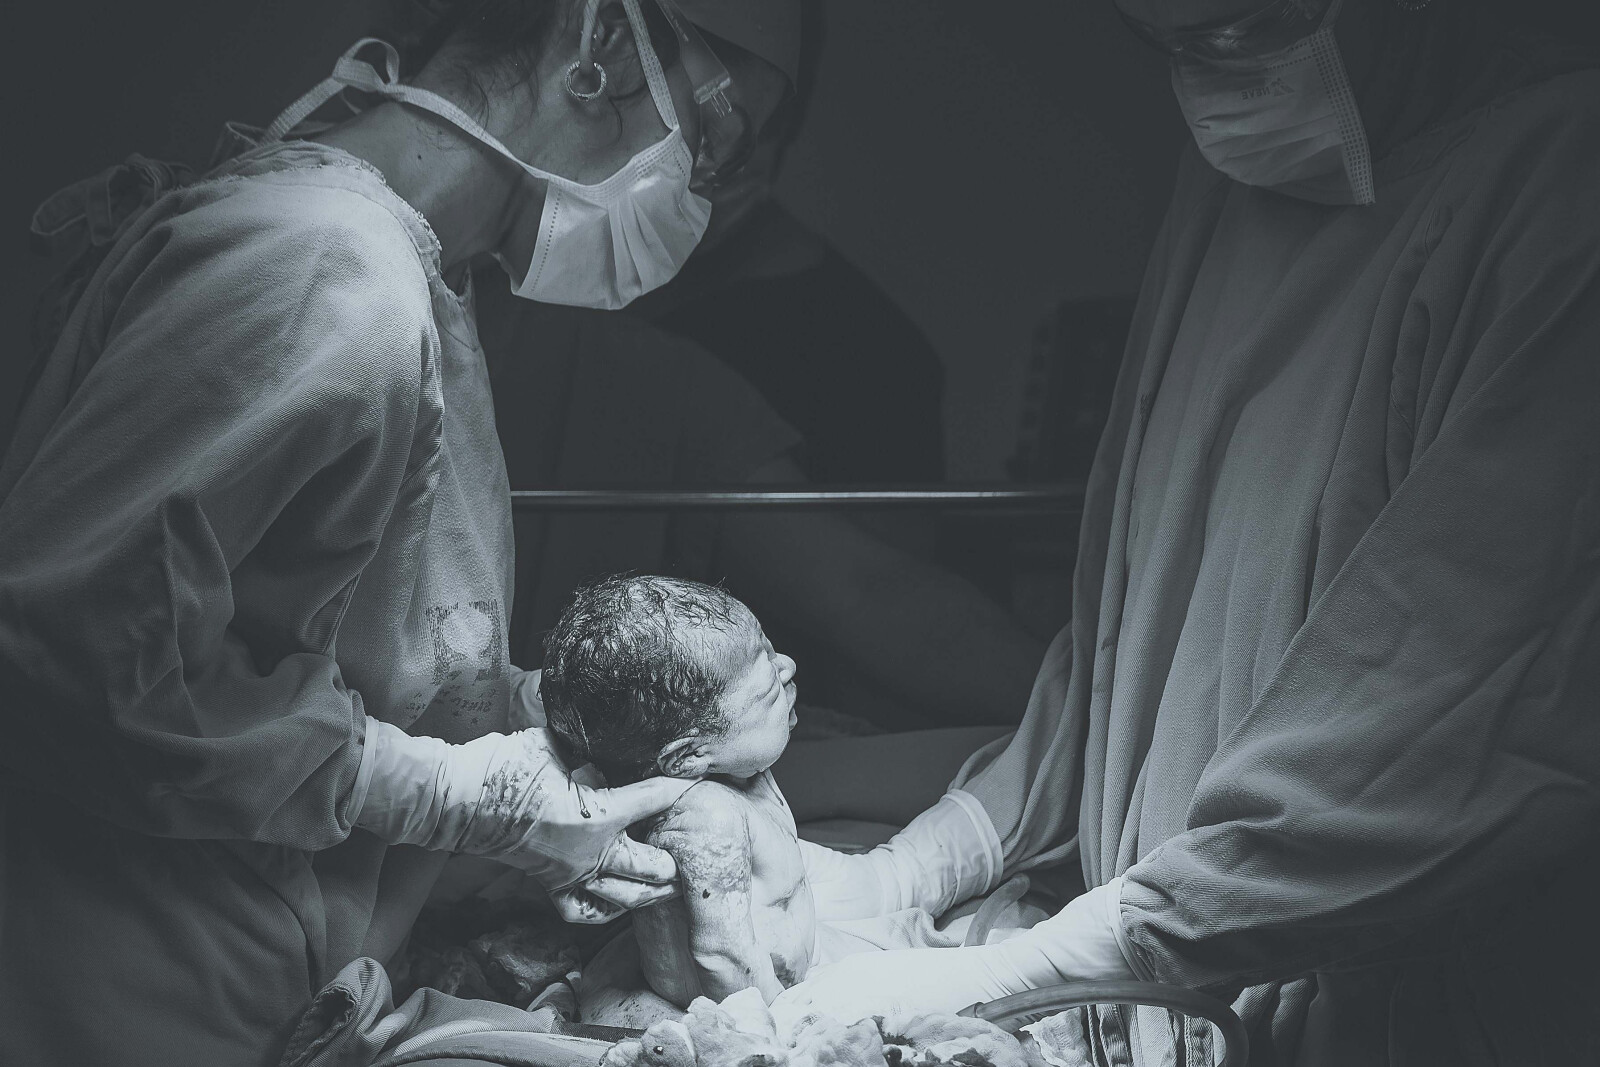 Tragic Death in Childbirth Sparks Lawsuit Against Negligent Hospital